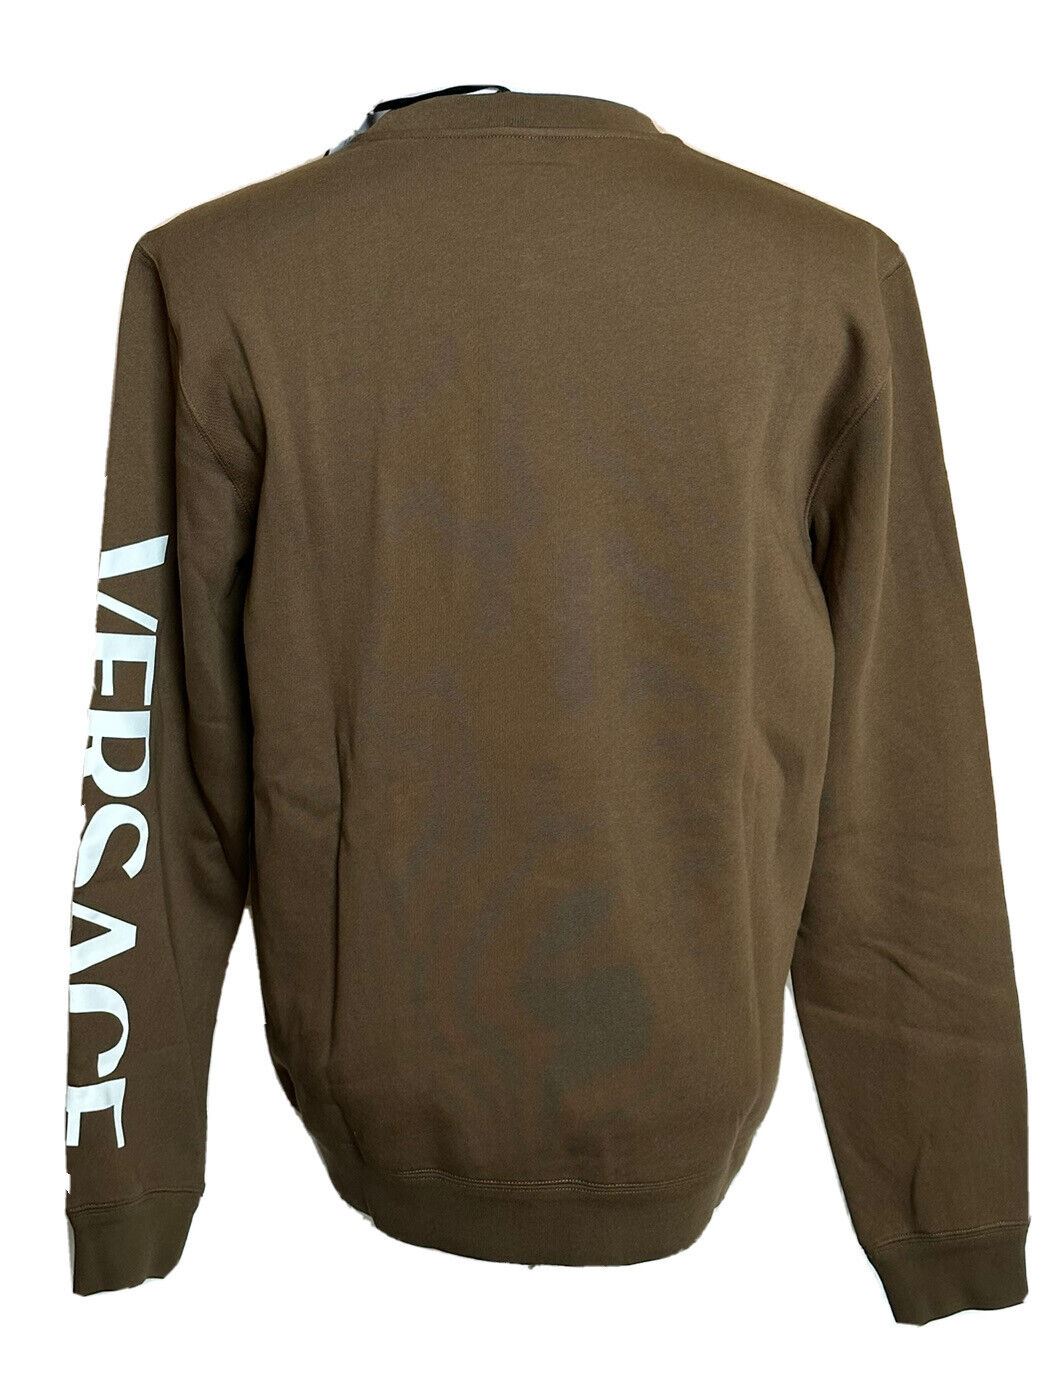 Neu mit Etikett: 850 $ Versace Medusa Renaissance Khaki Baumwoll-Sweatshirt 3XL 1008282 